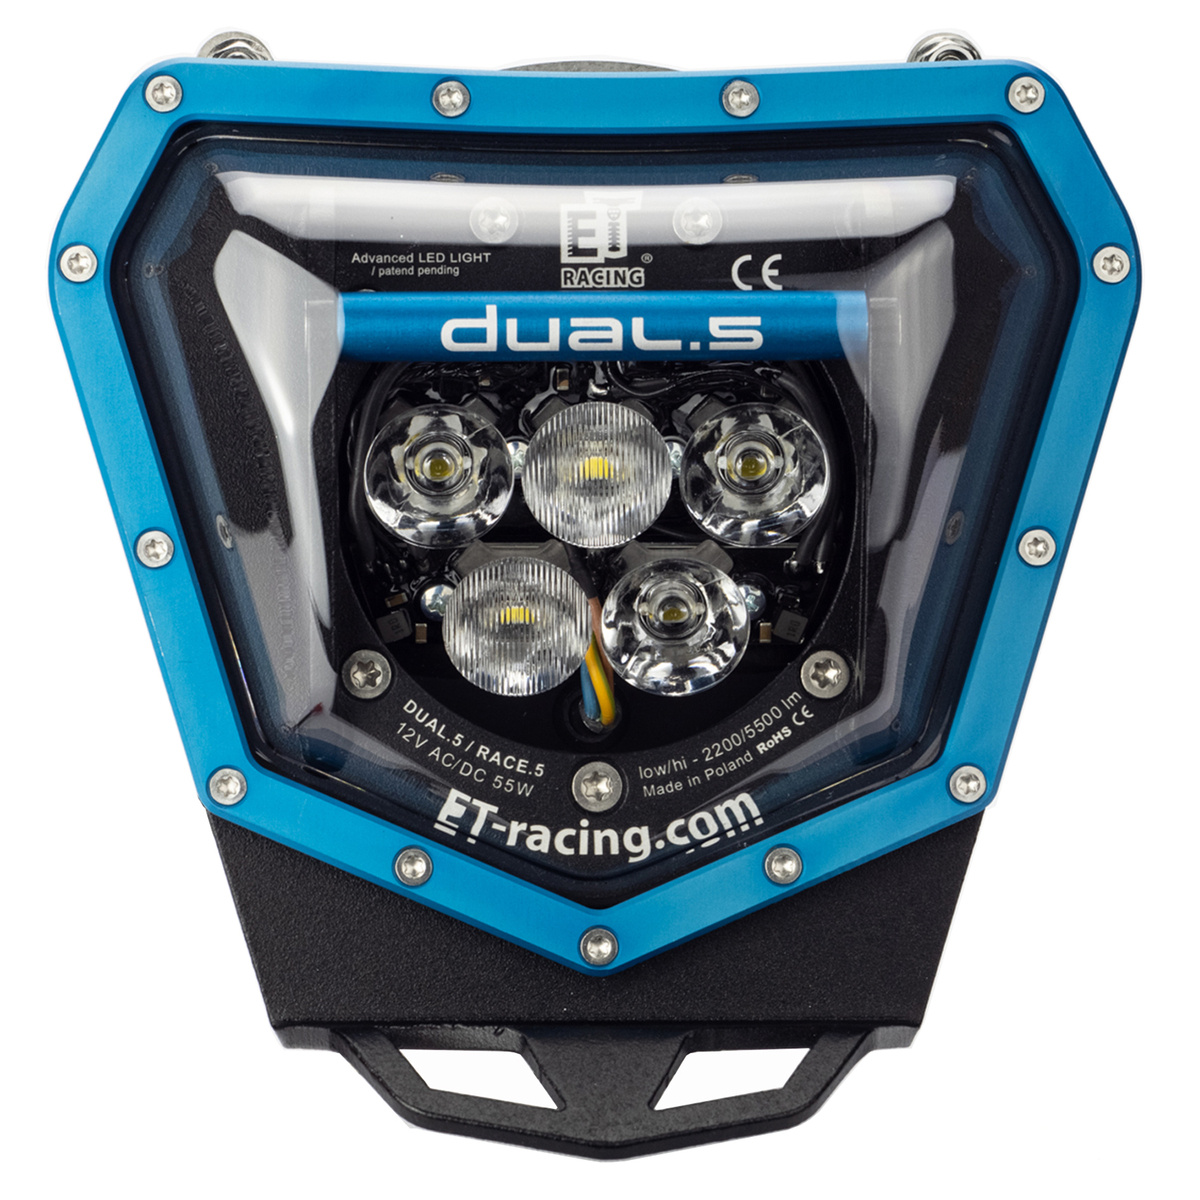 LED lamp Headlight Dual.5 KTM 150-500cc 2014-2023 EXC TPI/ EXC-F/XC/XC-F 690E/SMC-R 2019-2023 only FUEL INJECTION engine BLUE